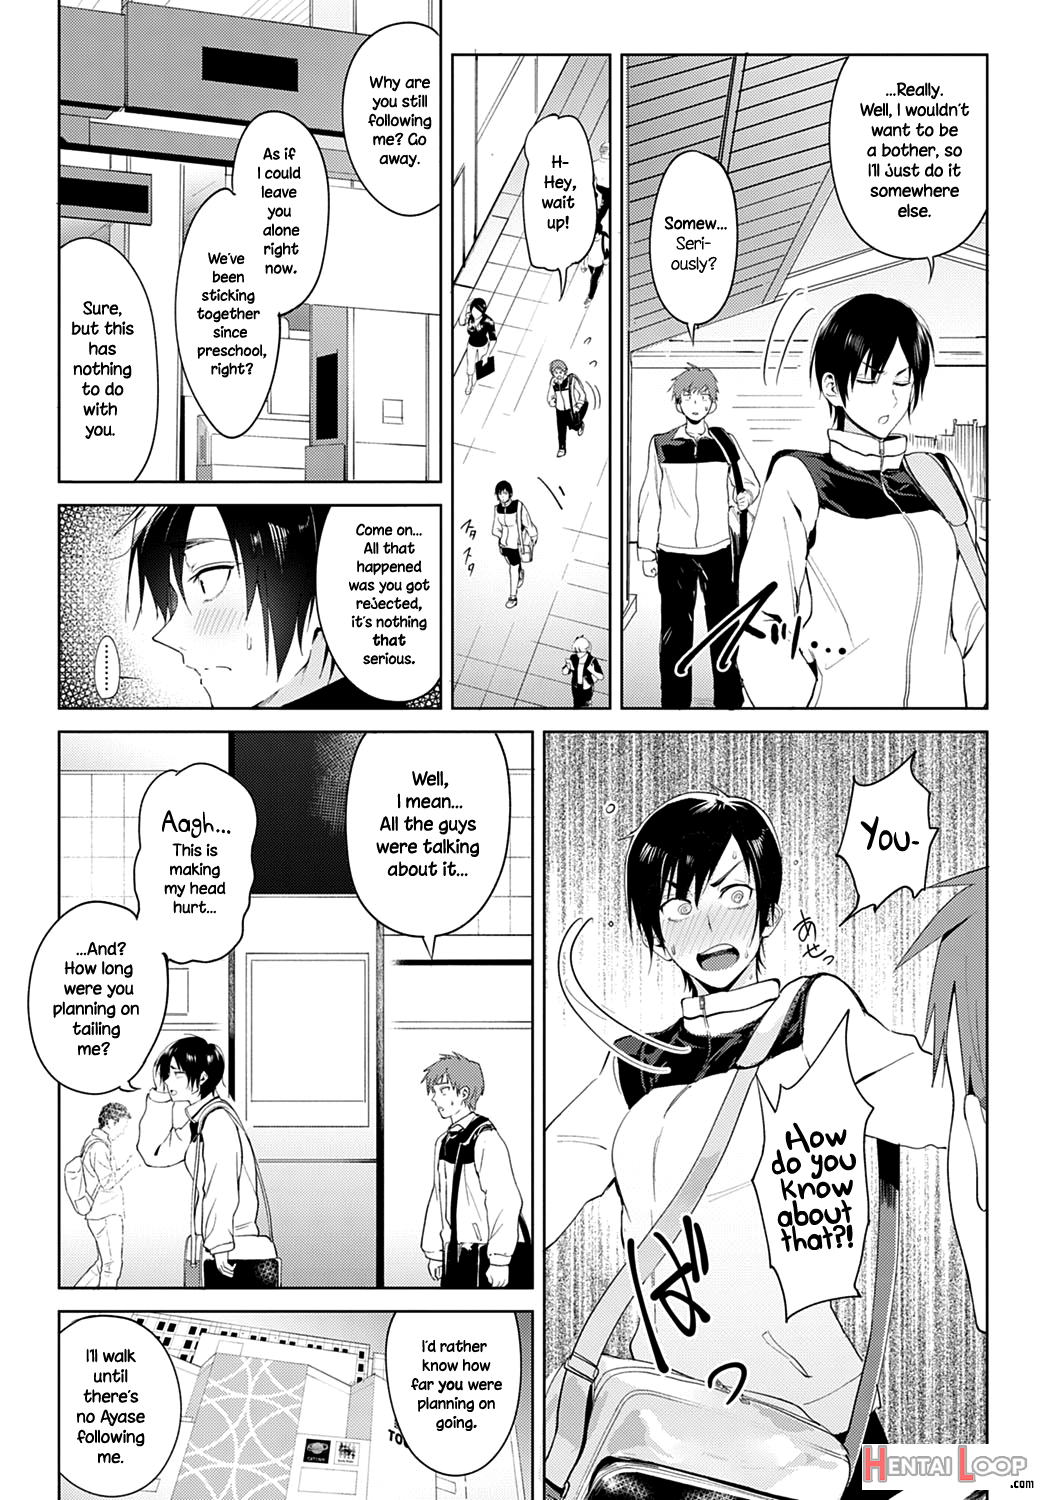 Chikihouyuu page 3